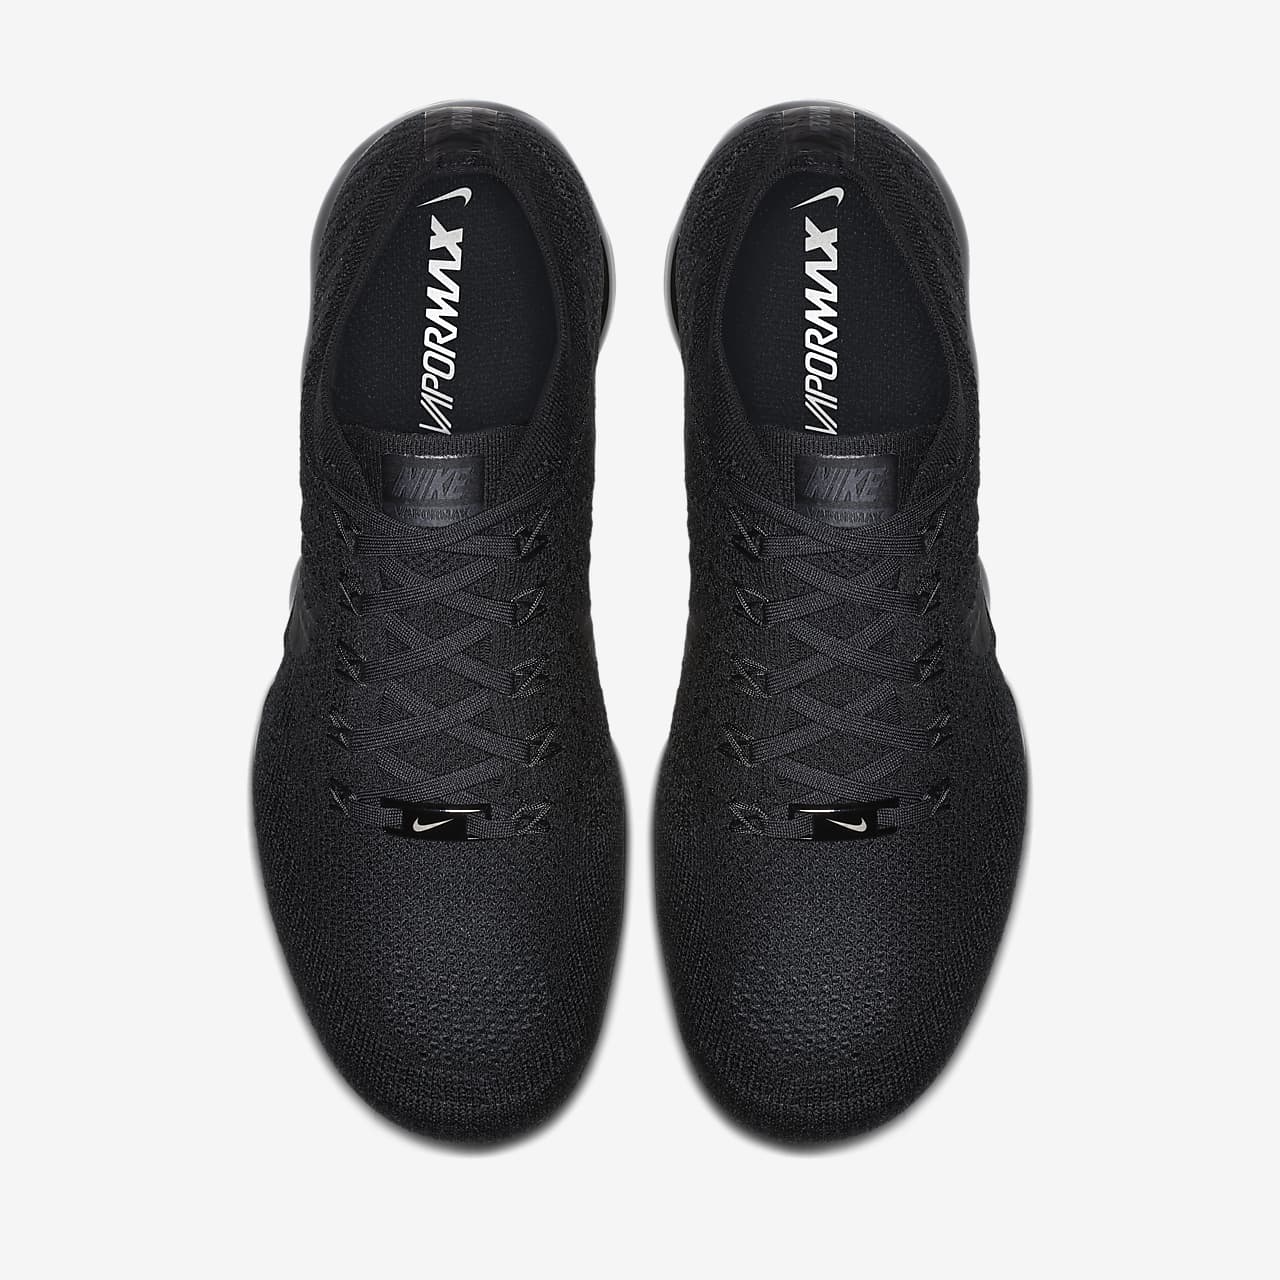 men's nike air vapormax running shoes